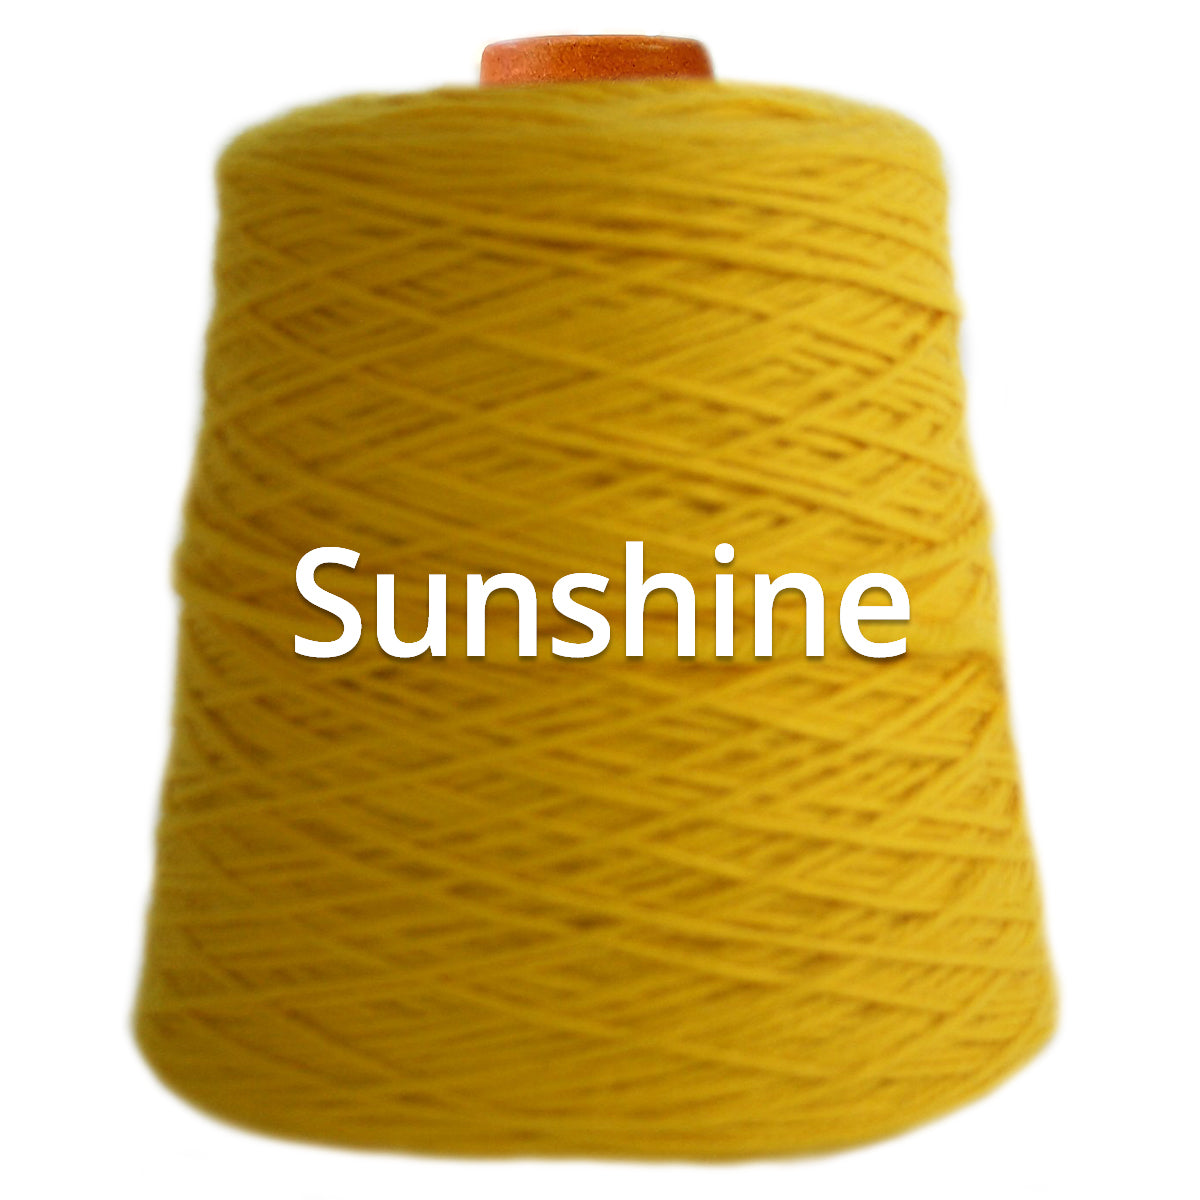 Sunshine - Nundle Collection 12 ply Chaffey Yarn 400g Cone